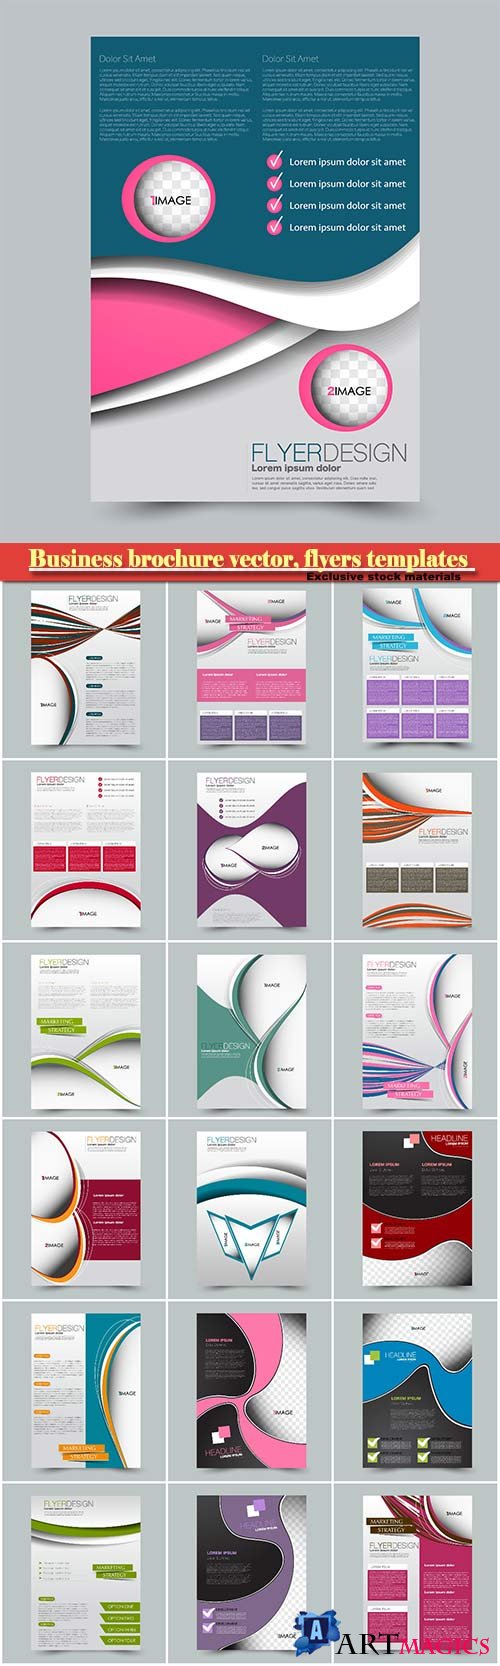 Business brochure vector, flyers templates # 36